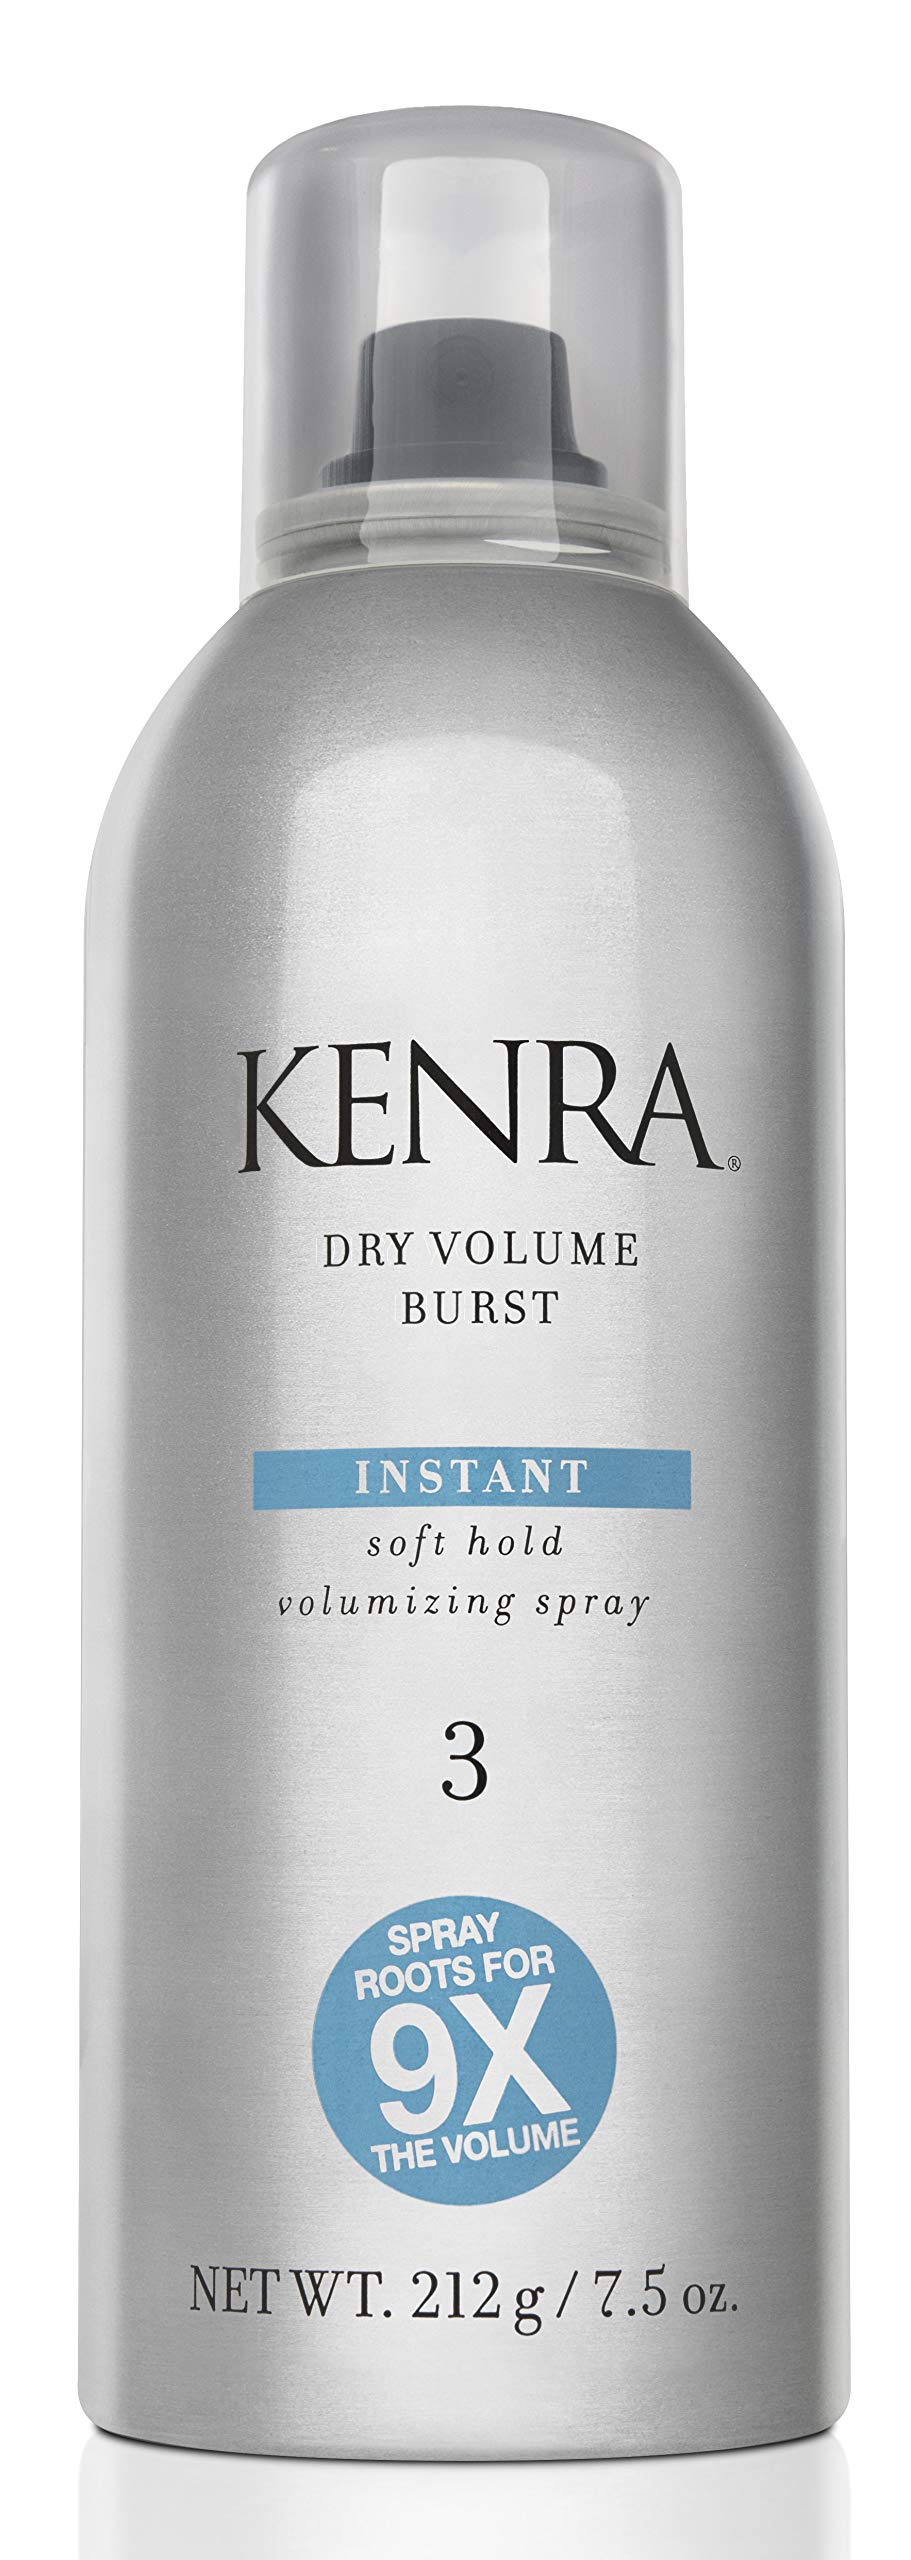 Kenra Professional Kenra Dry Volume Burst 3  Instant Volume Hairspray  Soft Hold Volumizing Spray  Dry Application  All Hair Types  75 oz